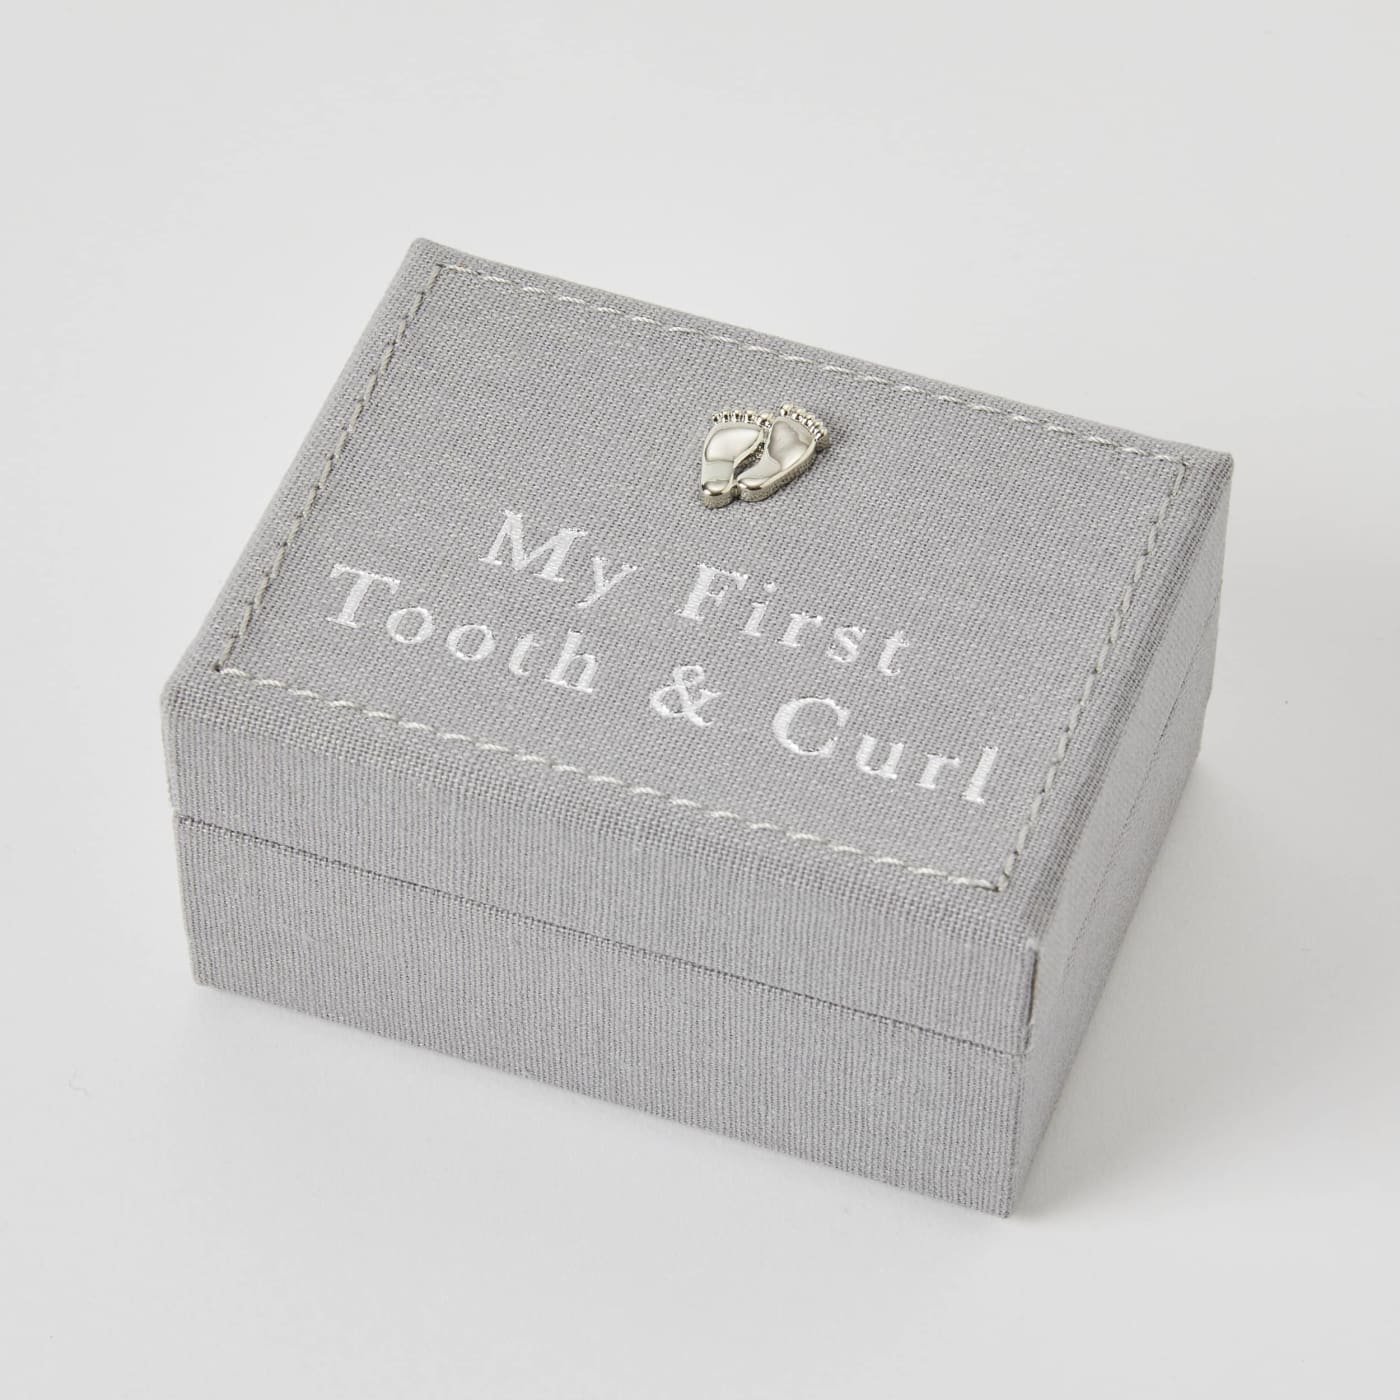 Jiggle & Giggle Mini Treasures Baby Box - My First Tooth & Curl - Grey - GIFTWARE - KEEPSAKES